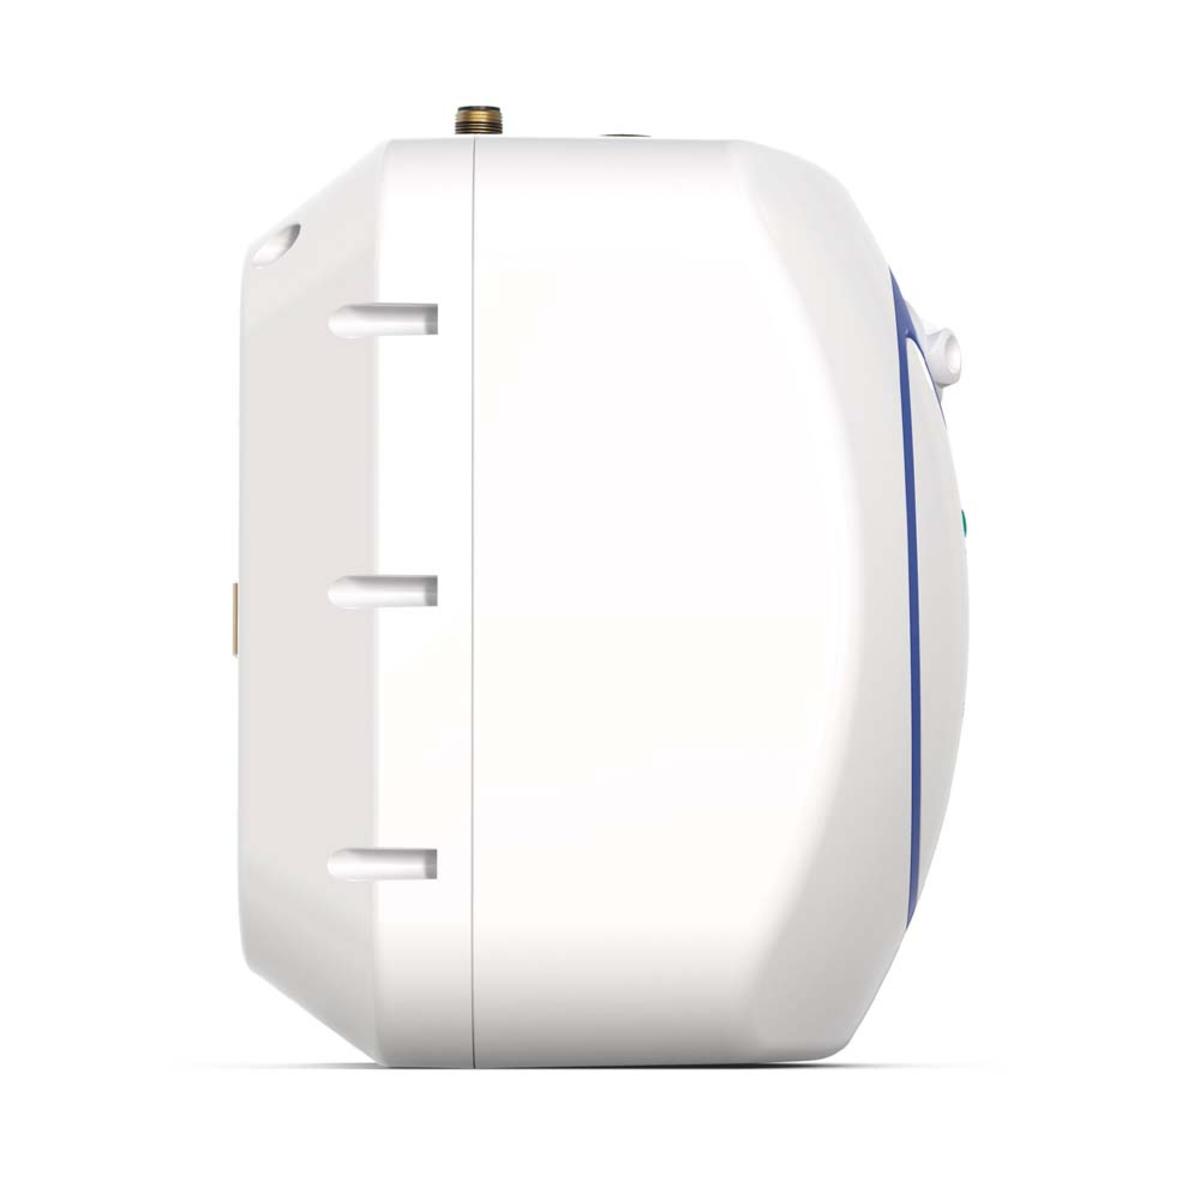 Eccotemp Electric 7 Gallon Mini Storage Tank Water Heater - White